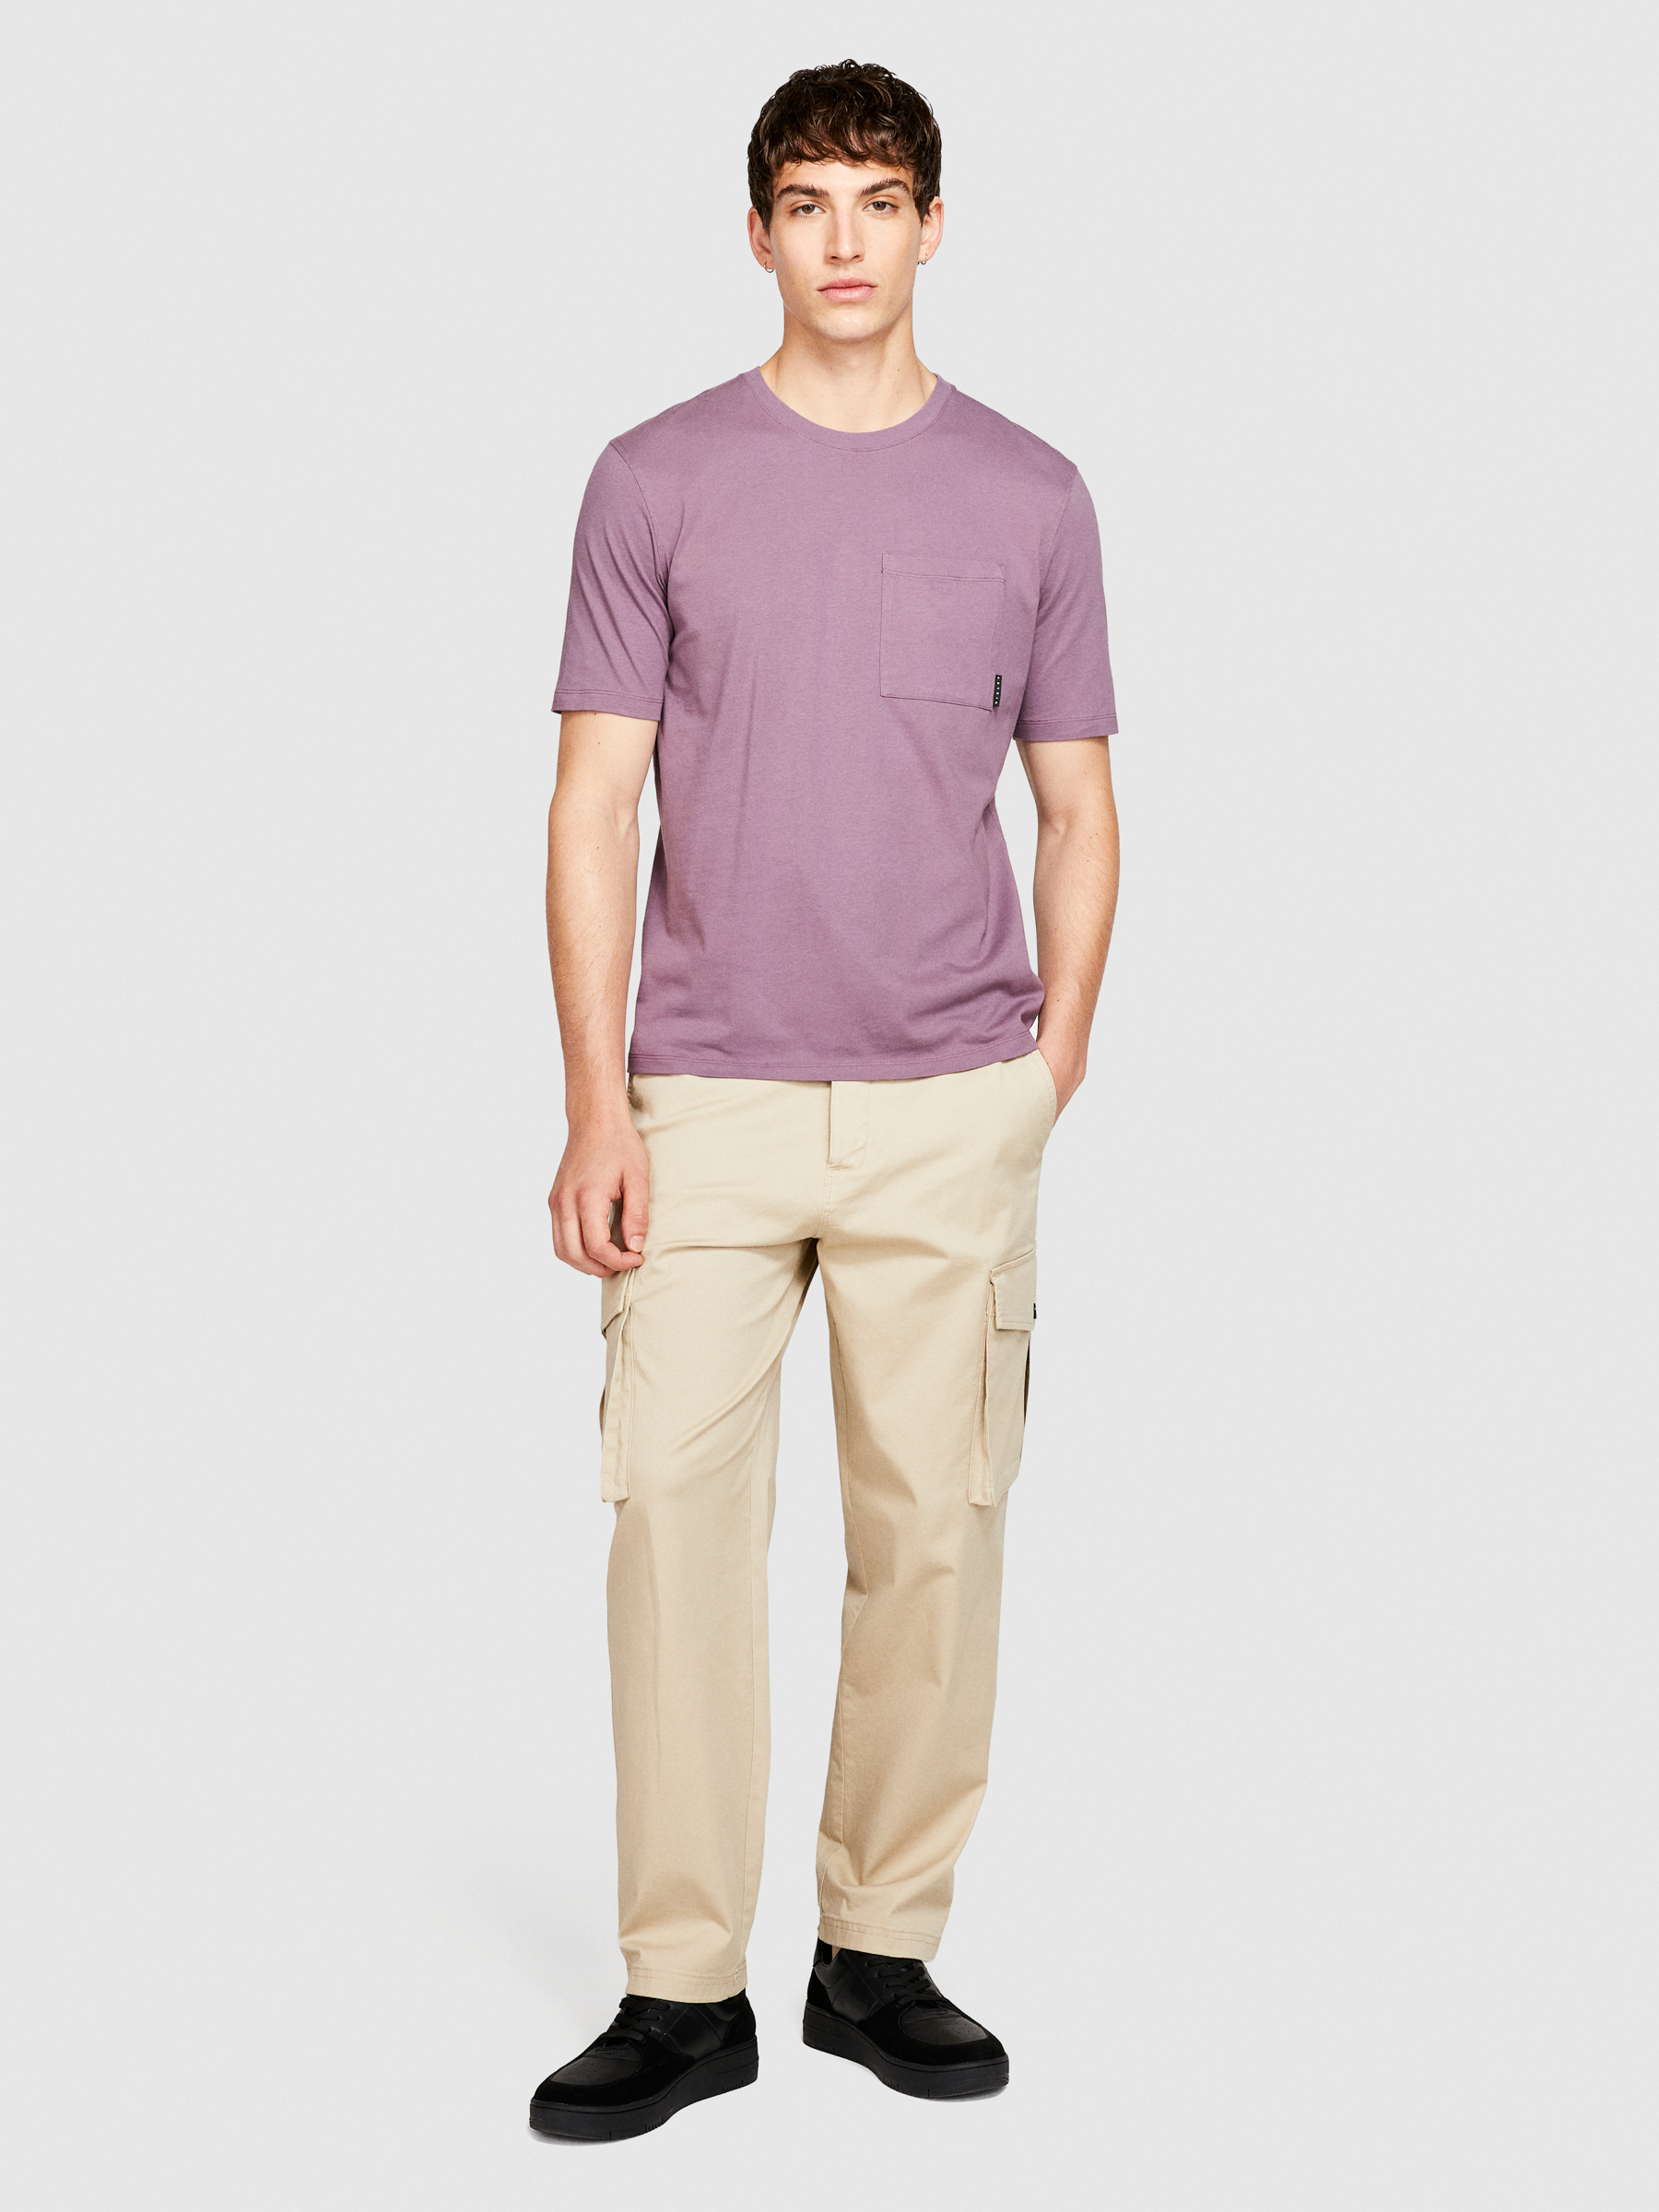 Sisley - T-shirt With Pocket, Man, Mauve, Size: M